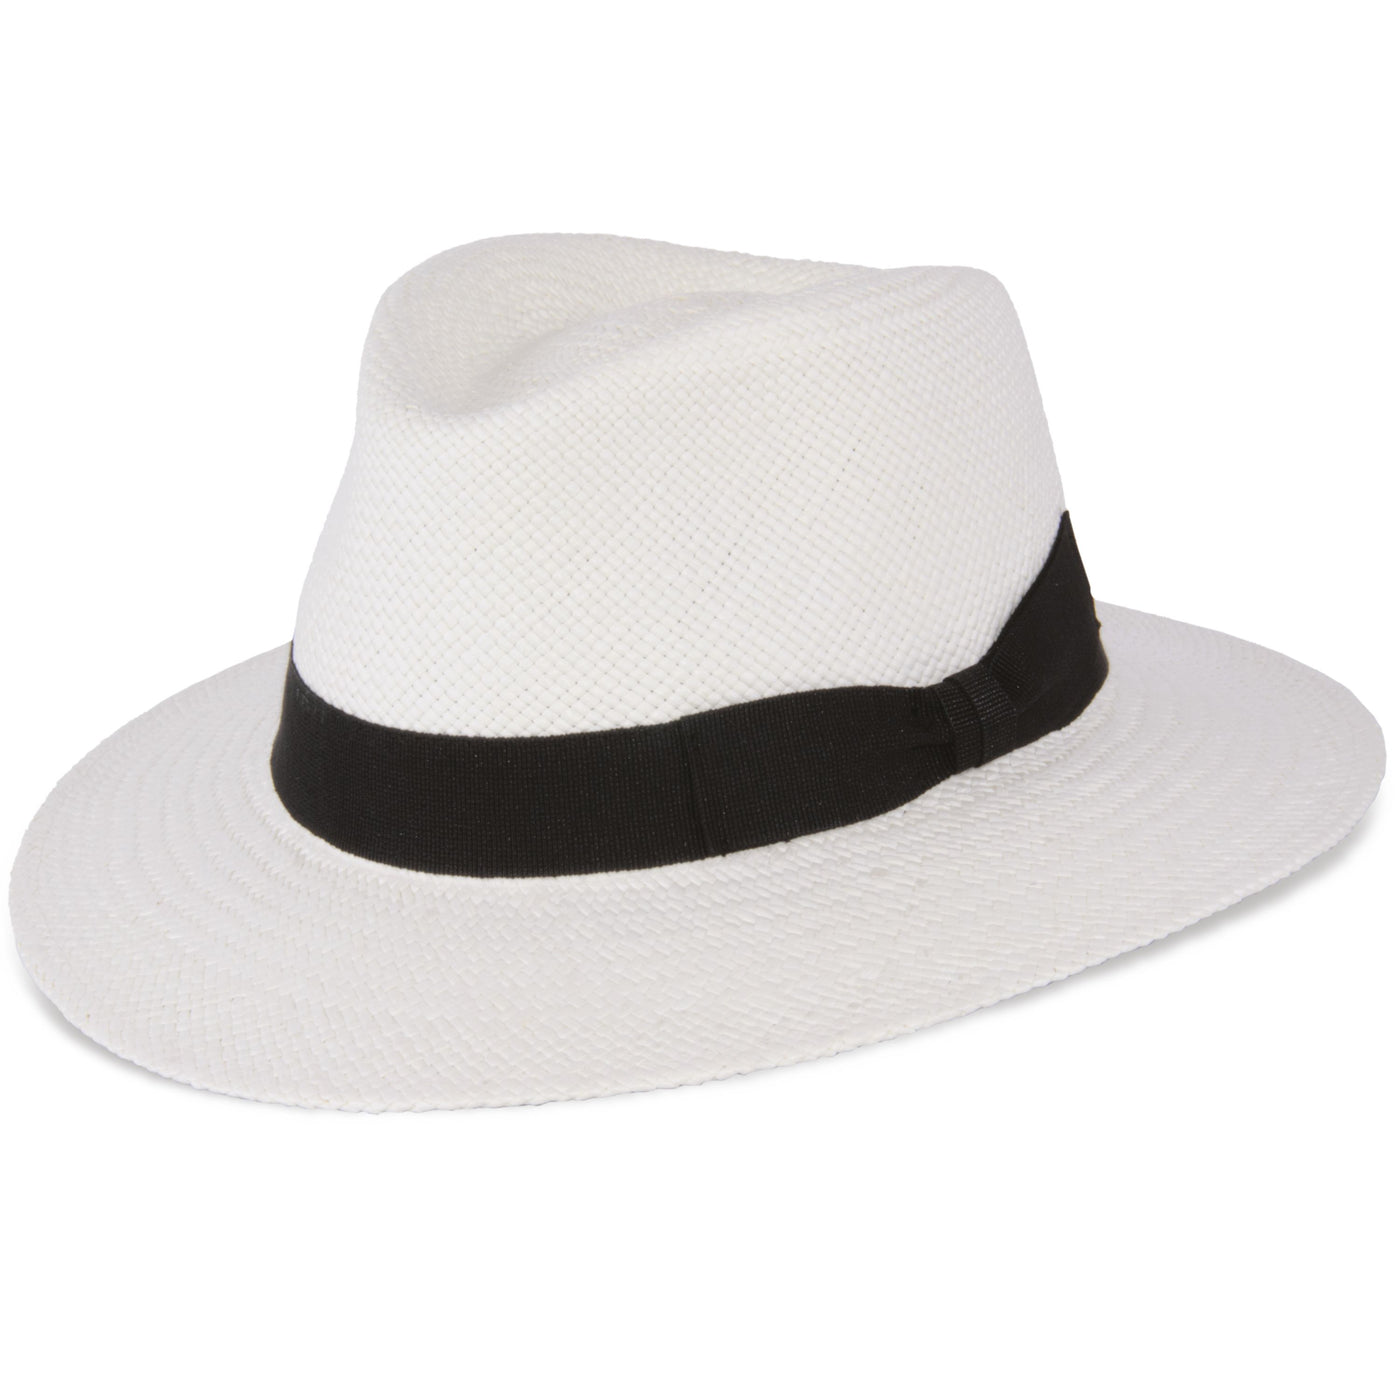 MJM Pacora Panama Hat - Stråhat Offwhite - Hat fra MJM Hats hos The Prince Webshop